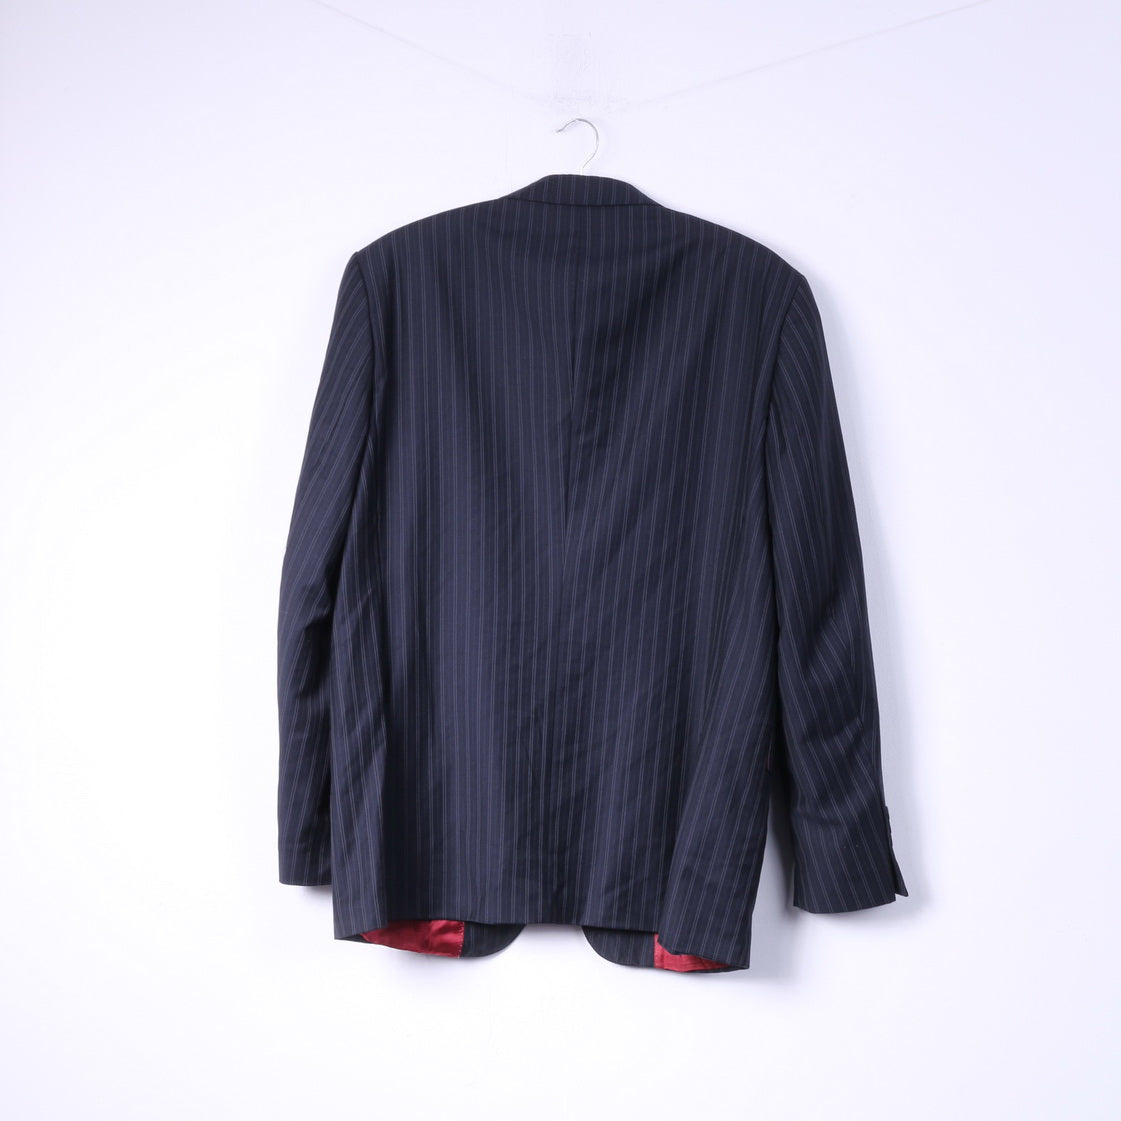 Zara Man 56 46 Blazer Navy Striped Single Breasted Shoulder Pads Wool Top